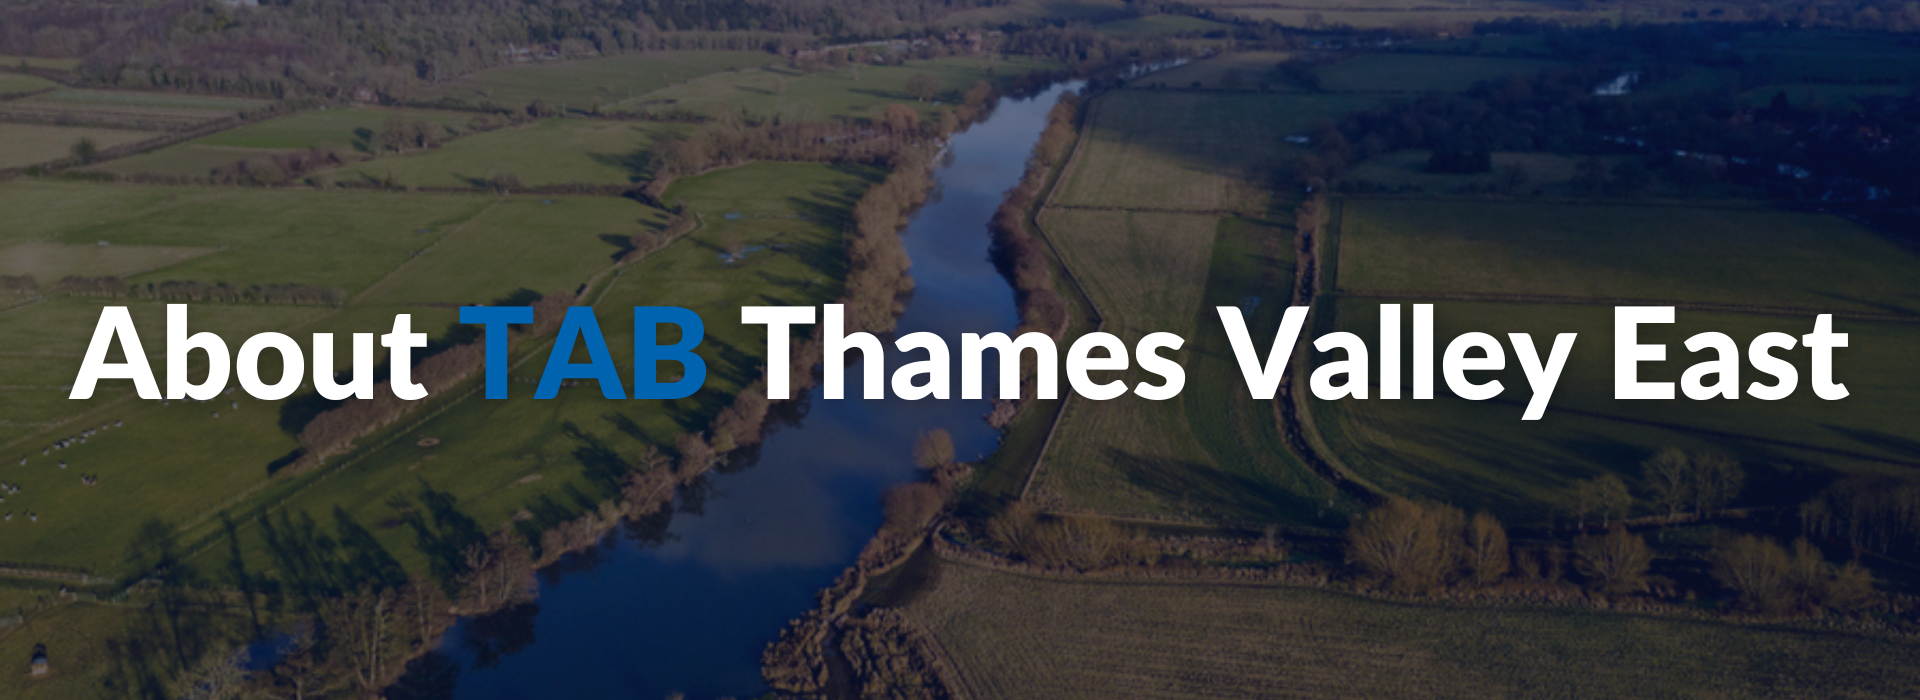 TAB Thames Valley East Website image